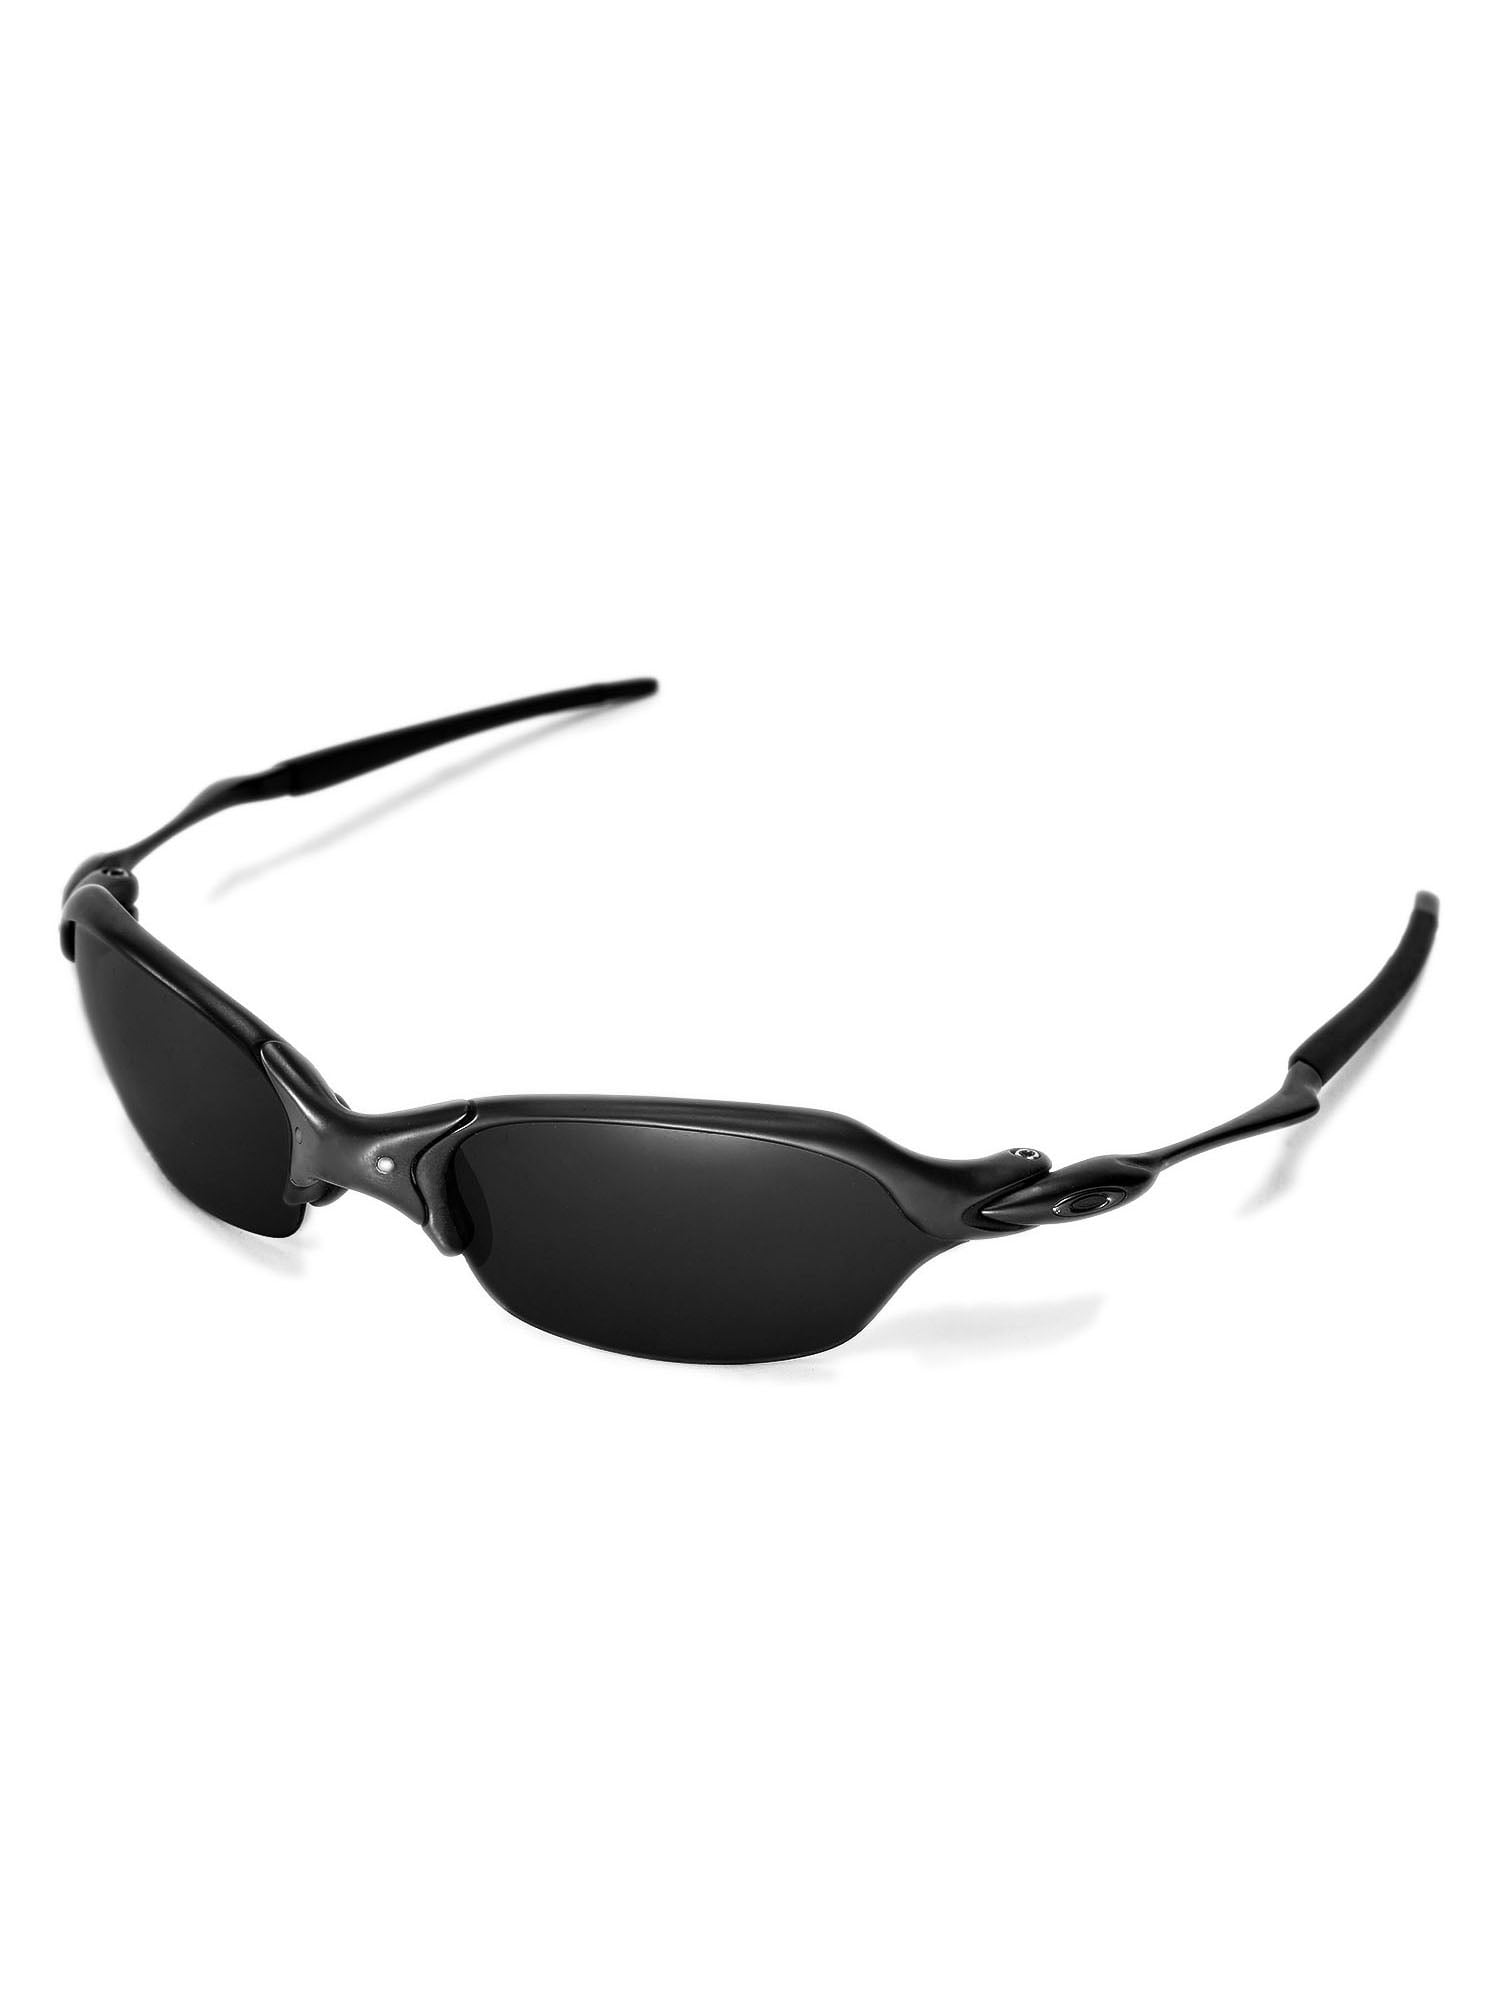 Walleva Black Polarized Replacement Lenses for Oakley Romeo  Sunglasses  